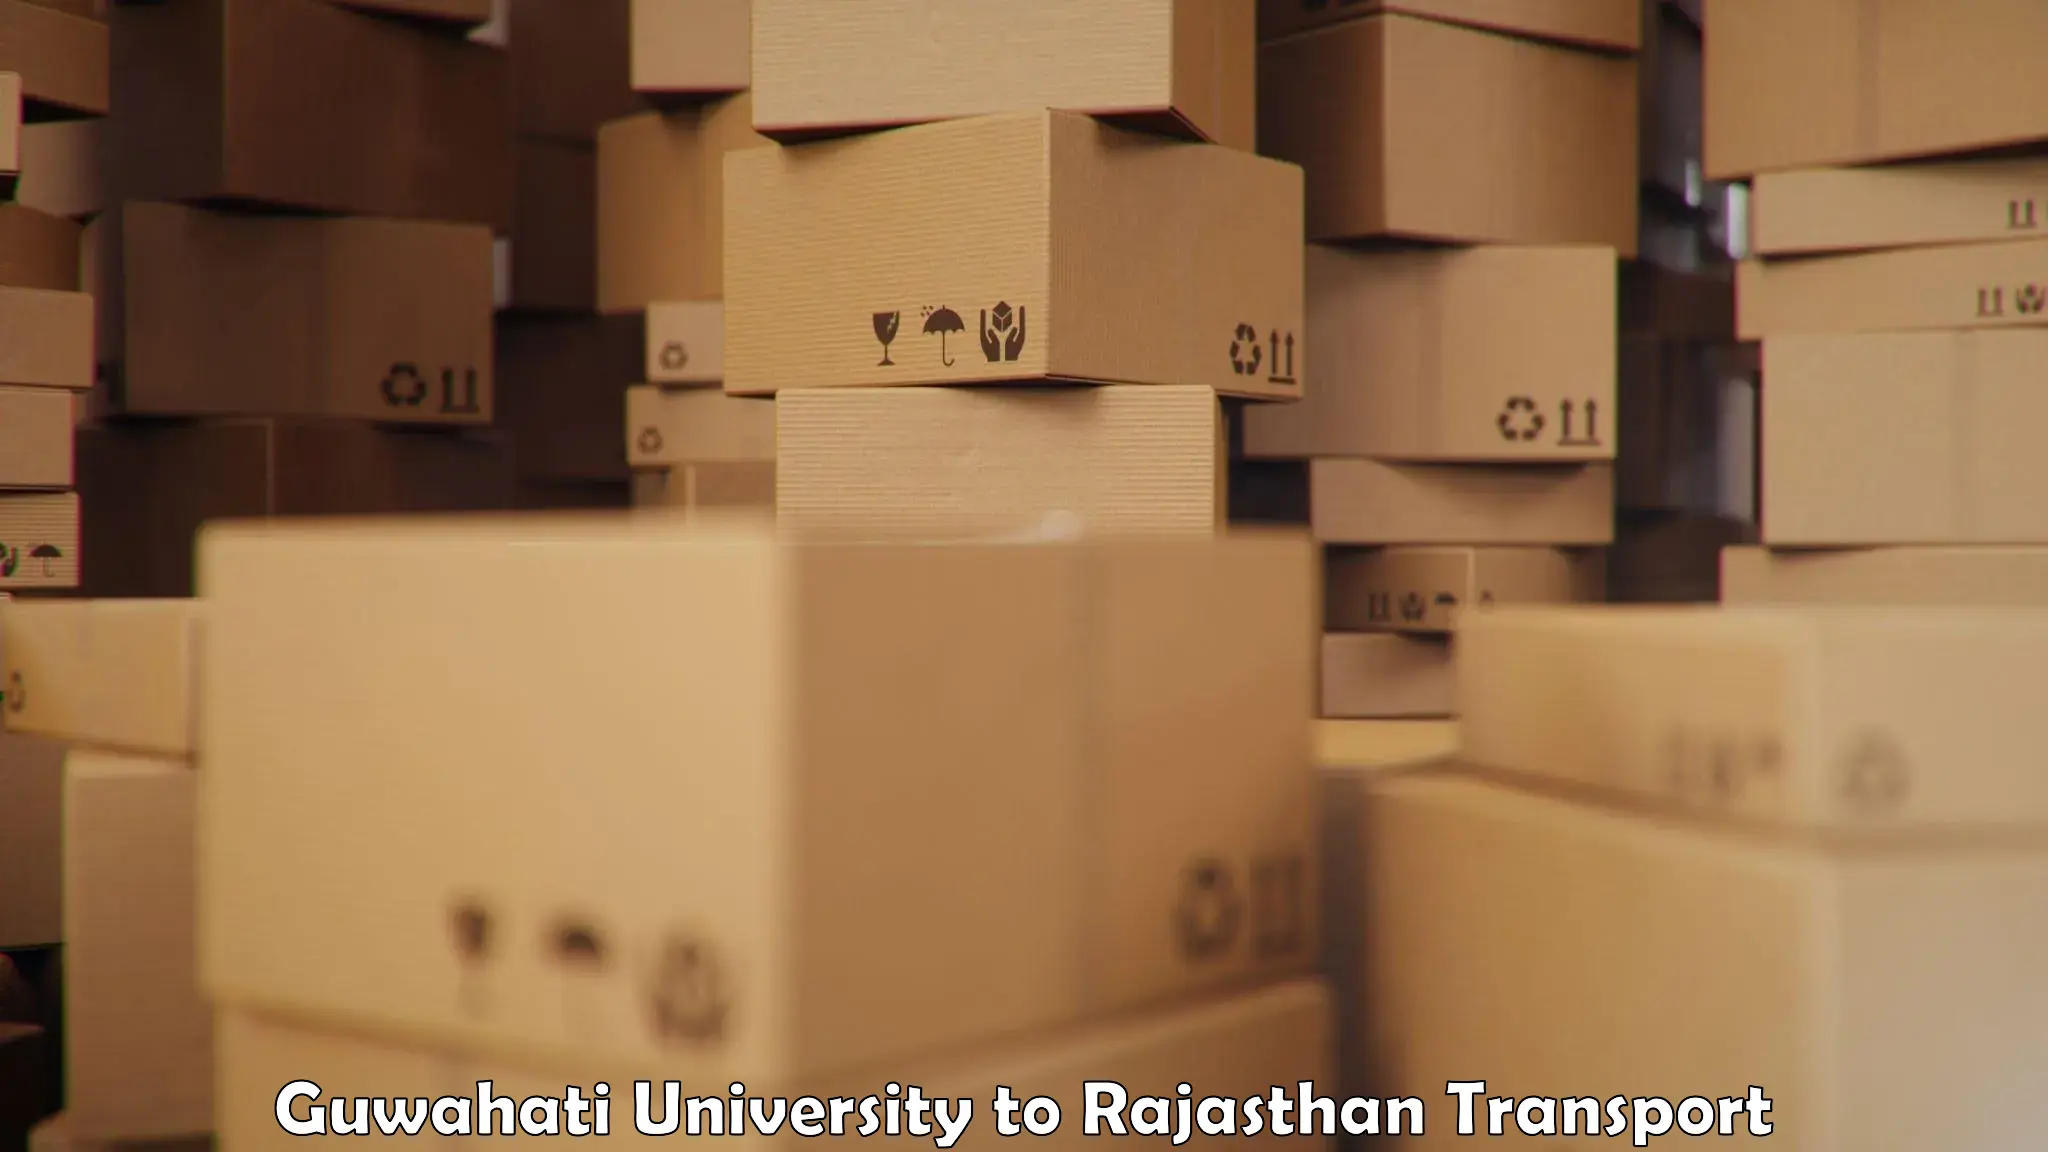 Pick up transport service Guwahati University to Degana